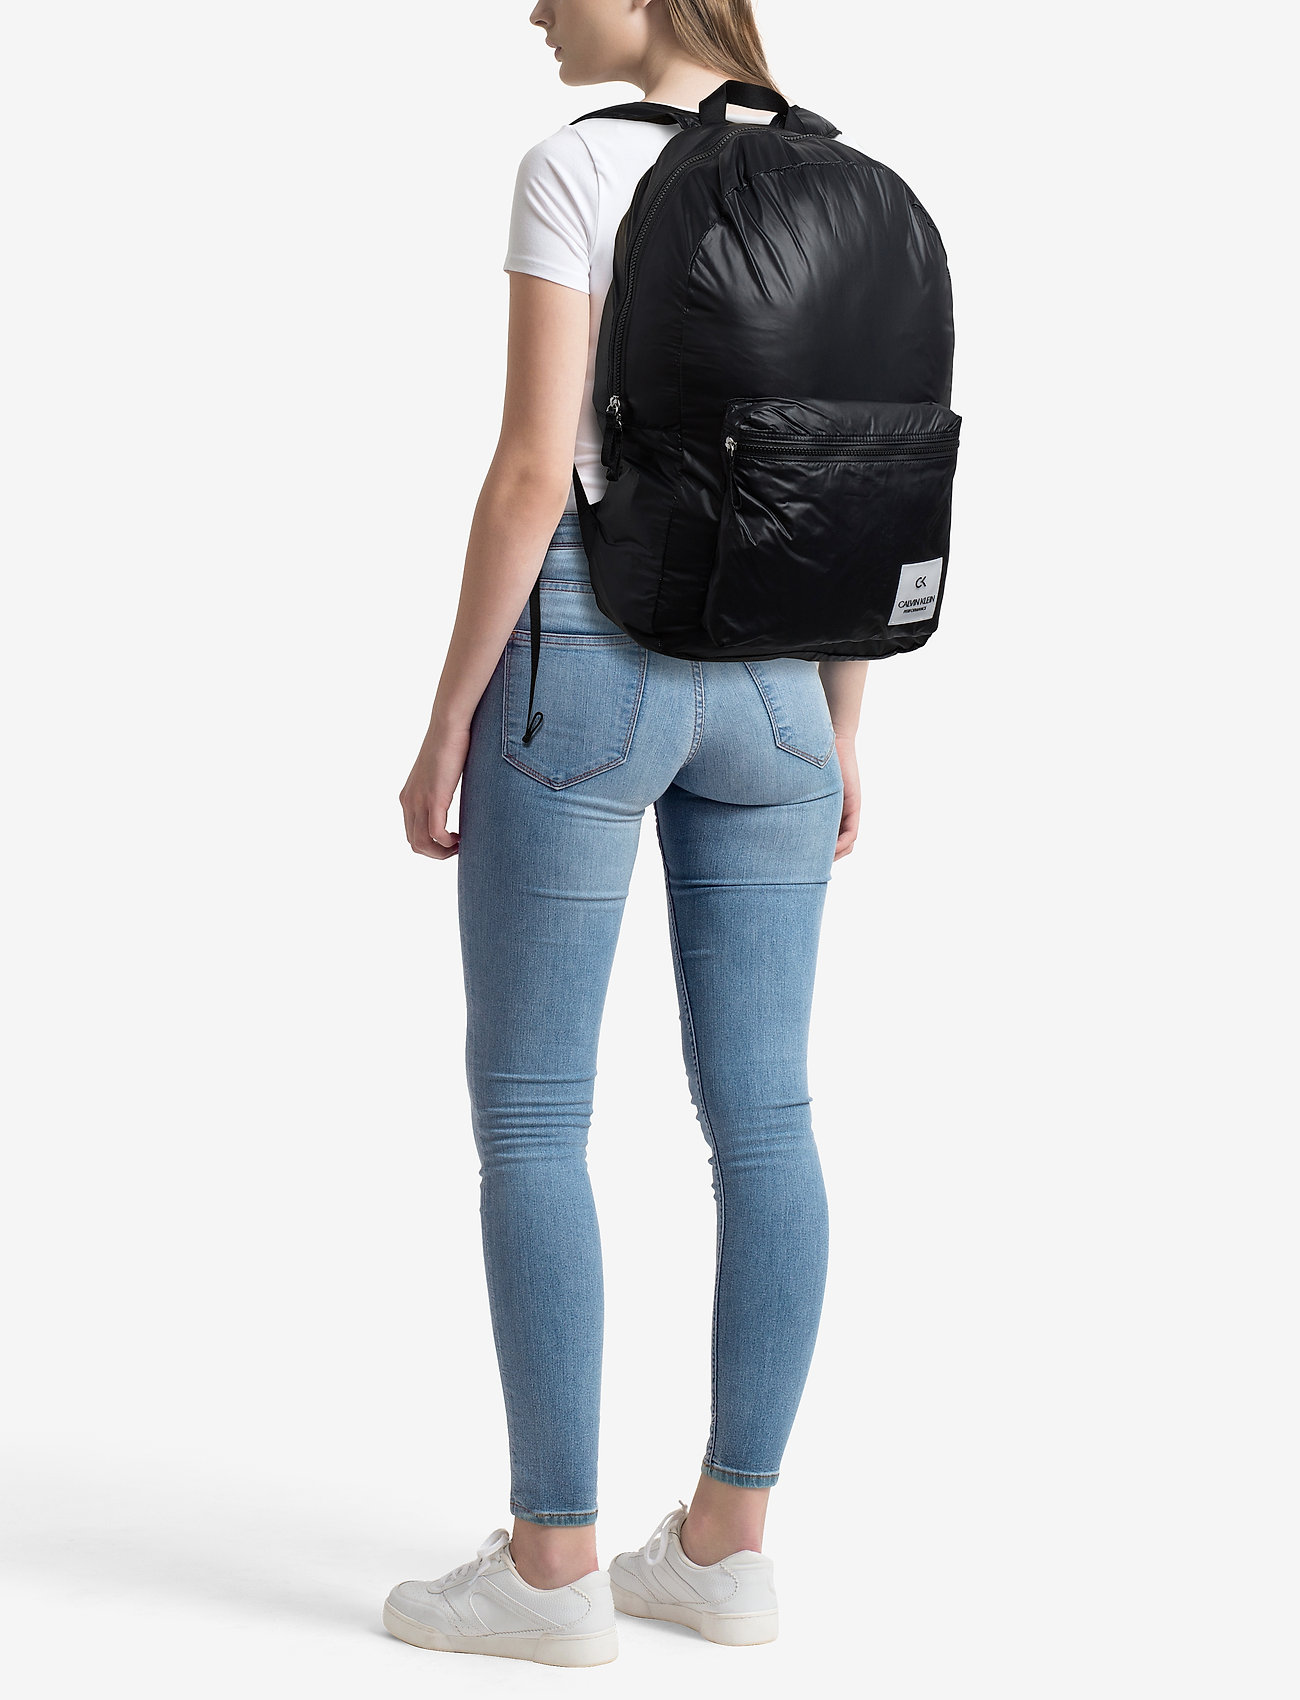 Calvin Klein Performance Zip Backpack 50cm, 0 (Black), 450 kr | Stort